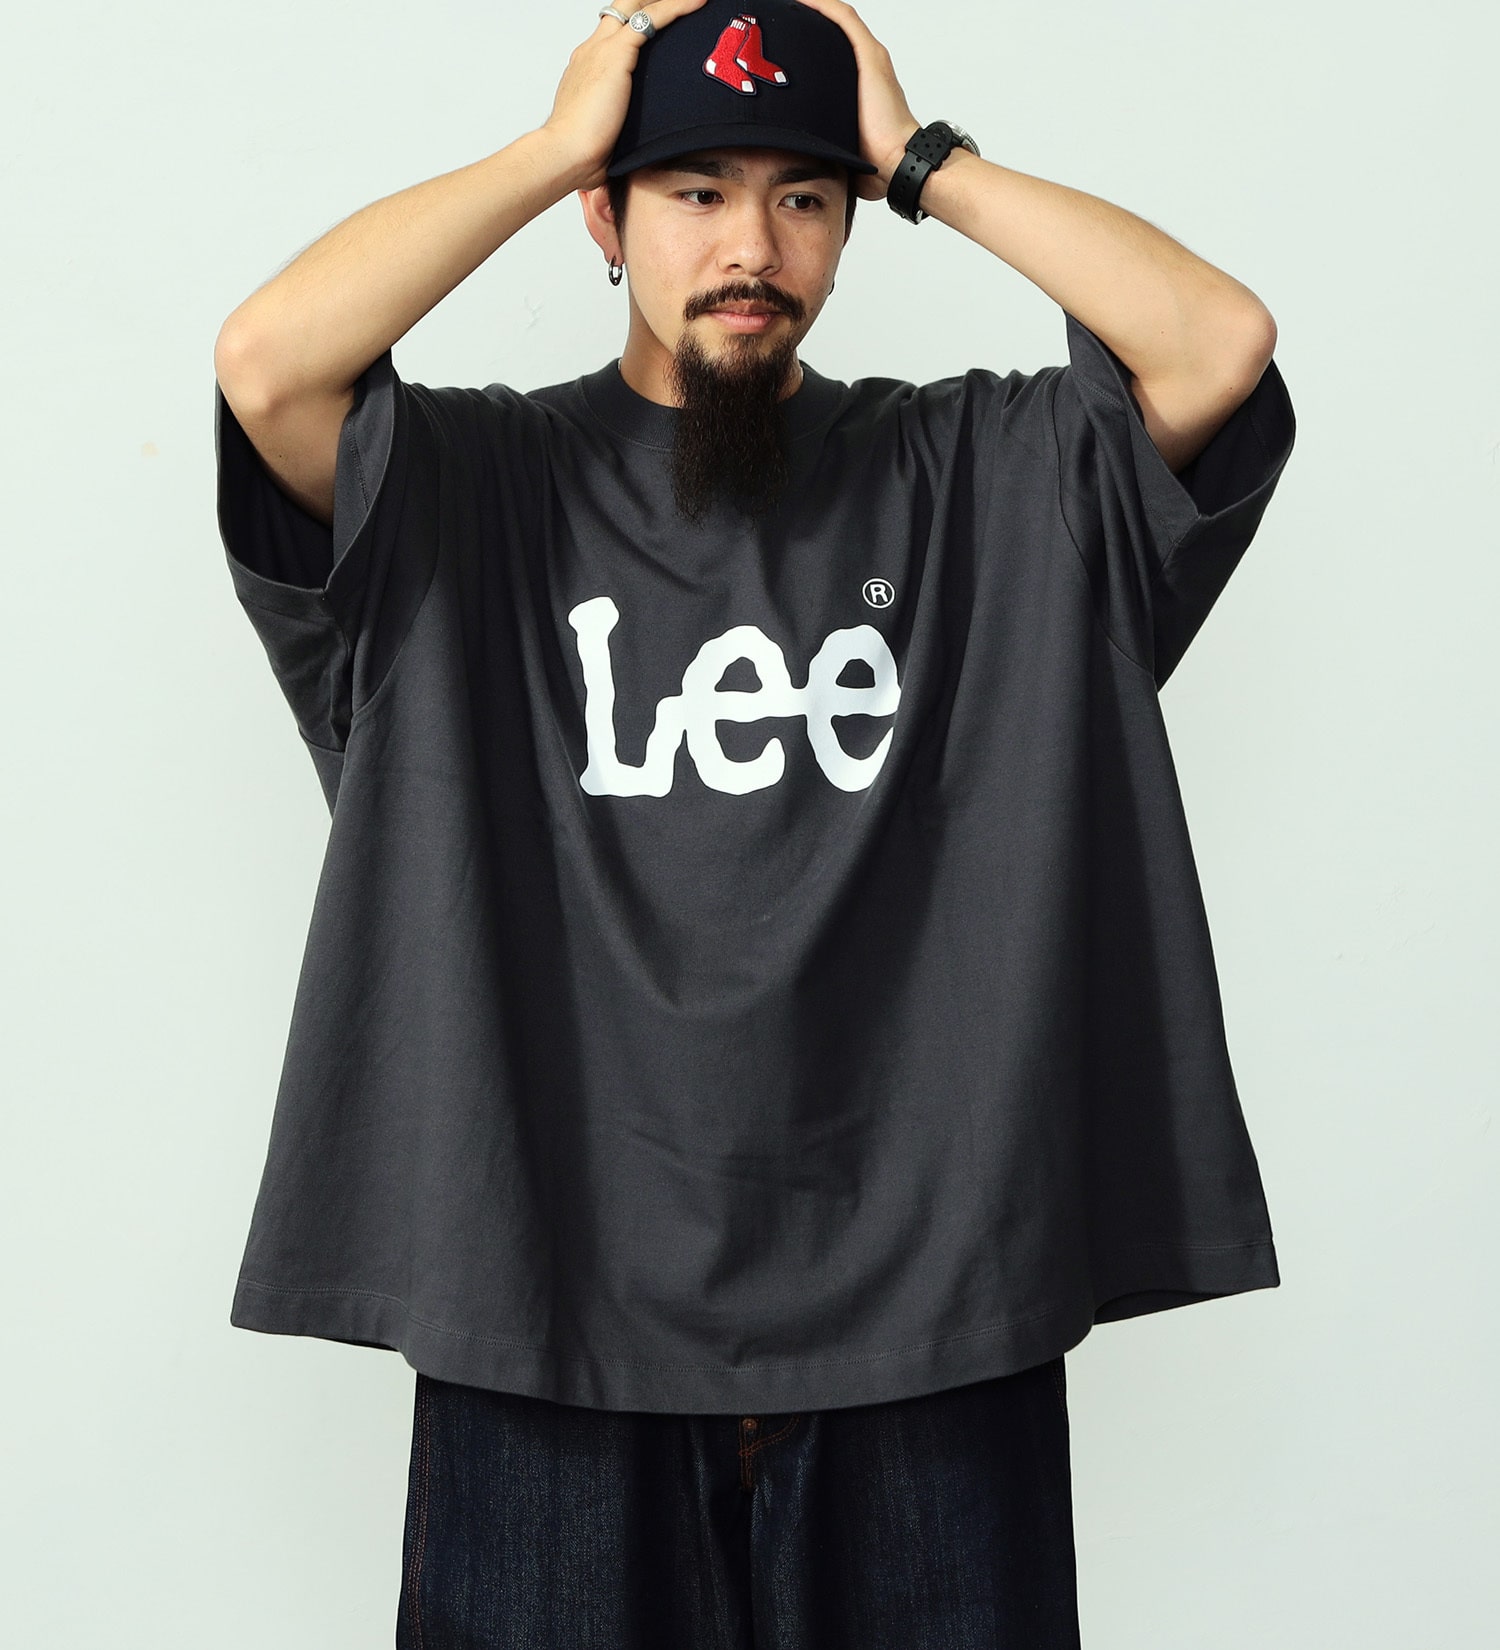 Lee(リー)の【GW SALE】【SUPER SIZED】Lee LOGO ショートスリーブTee|トップス/Tシャツ/カットソー/メンズ|チャコールグレー